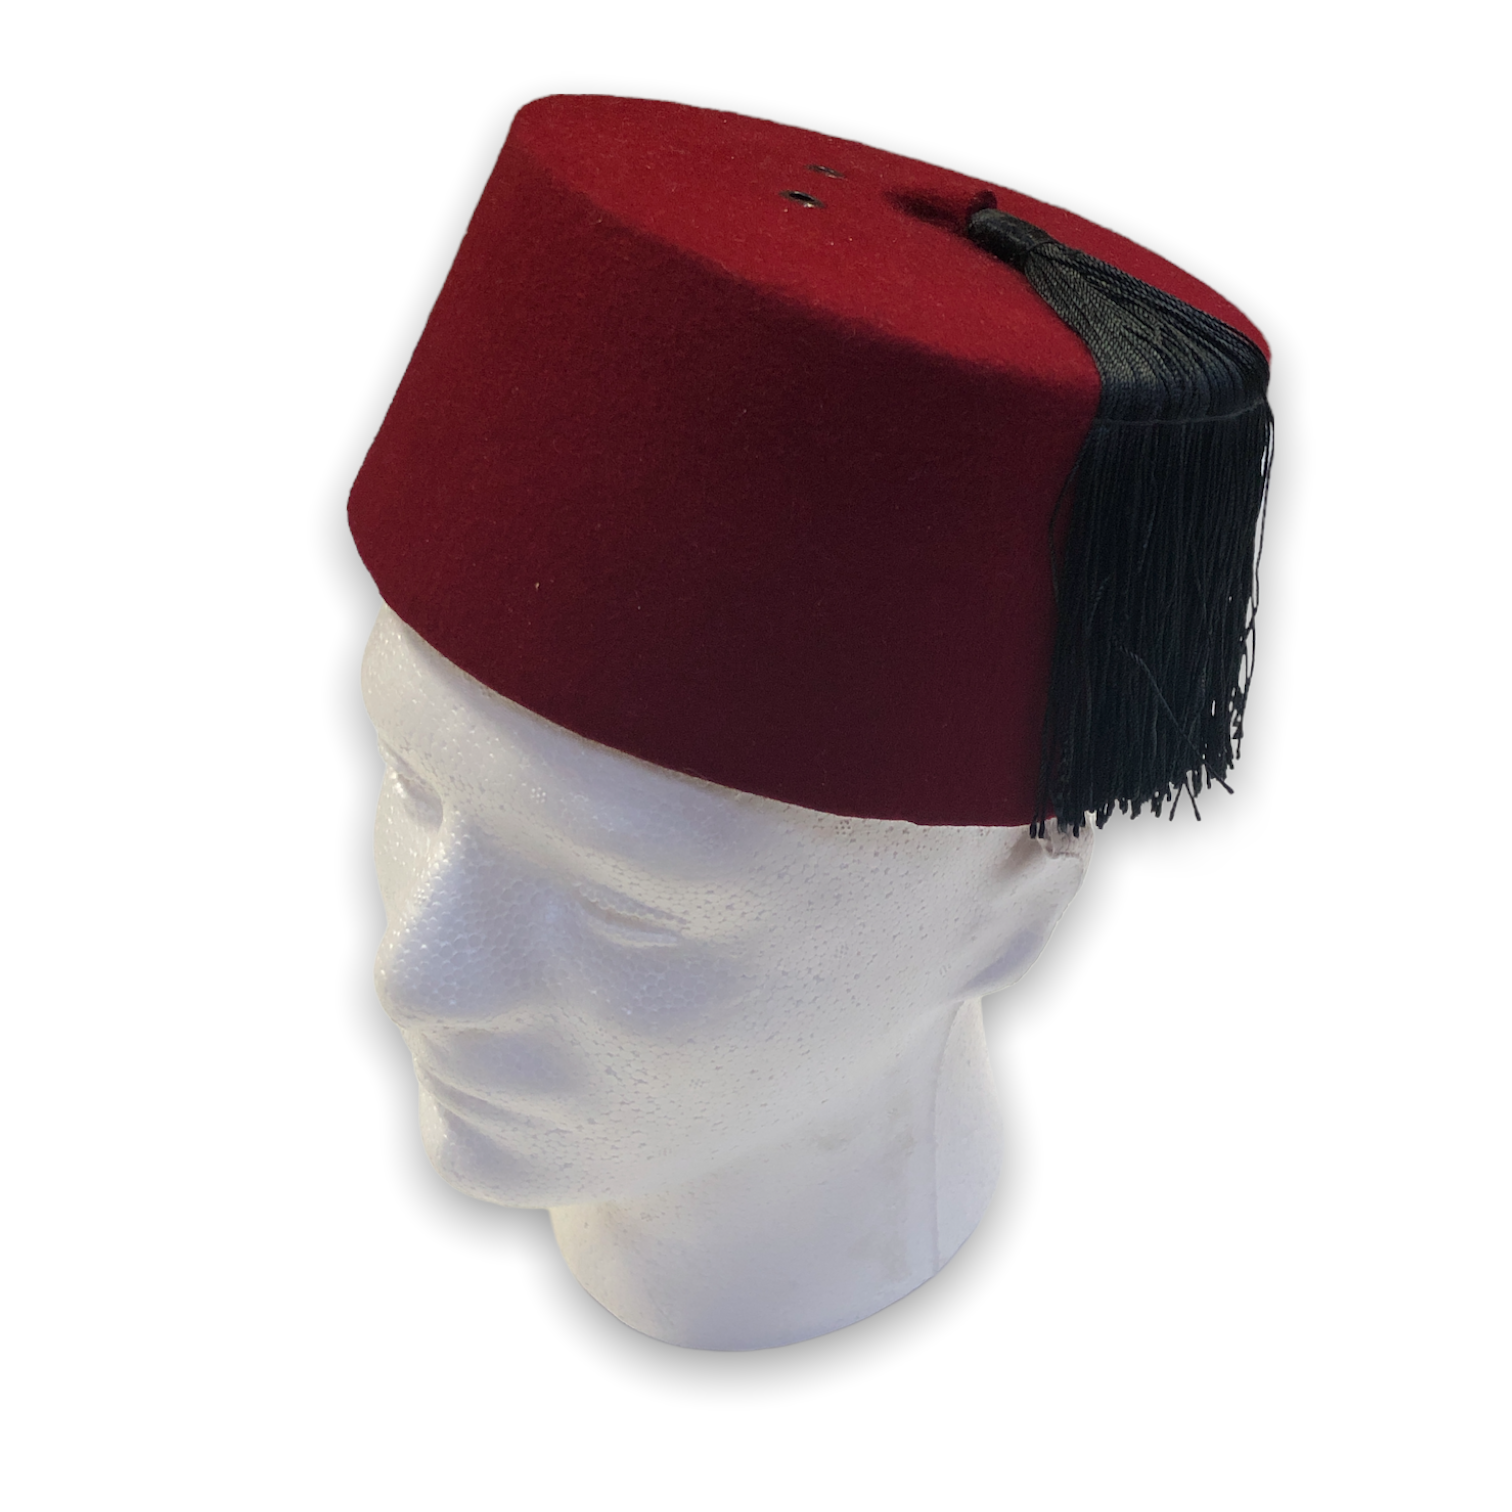 Moroccan Fez (Tarbouche) and Taqiyahs (Skullcap) Hats